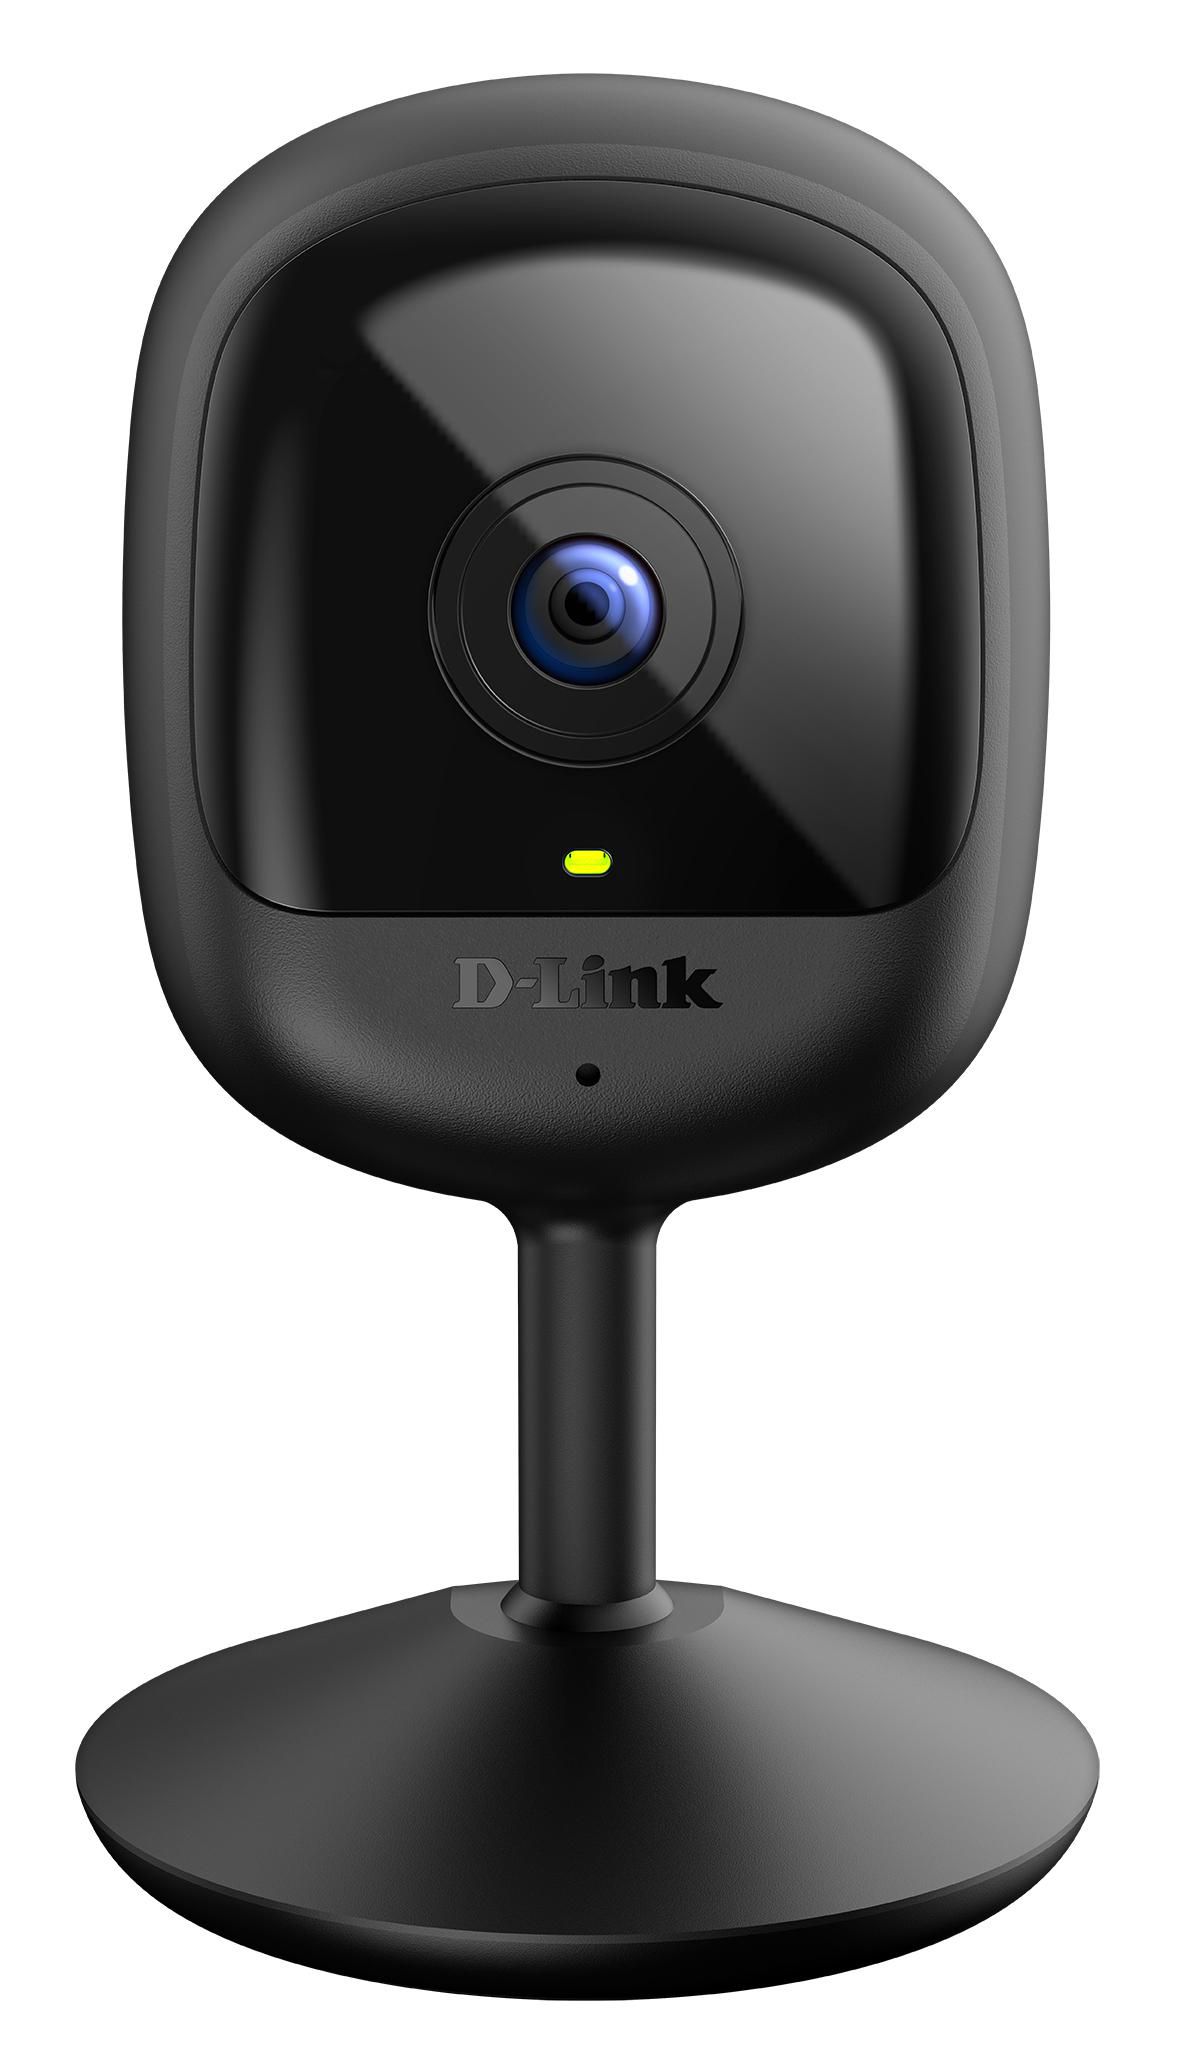 D-Link DCS-6100LHE W125847965 Compact Full HD Wi-Fi Camera 